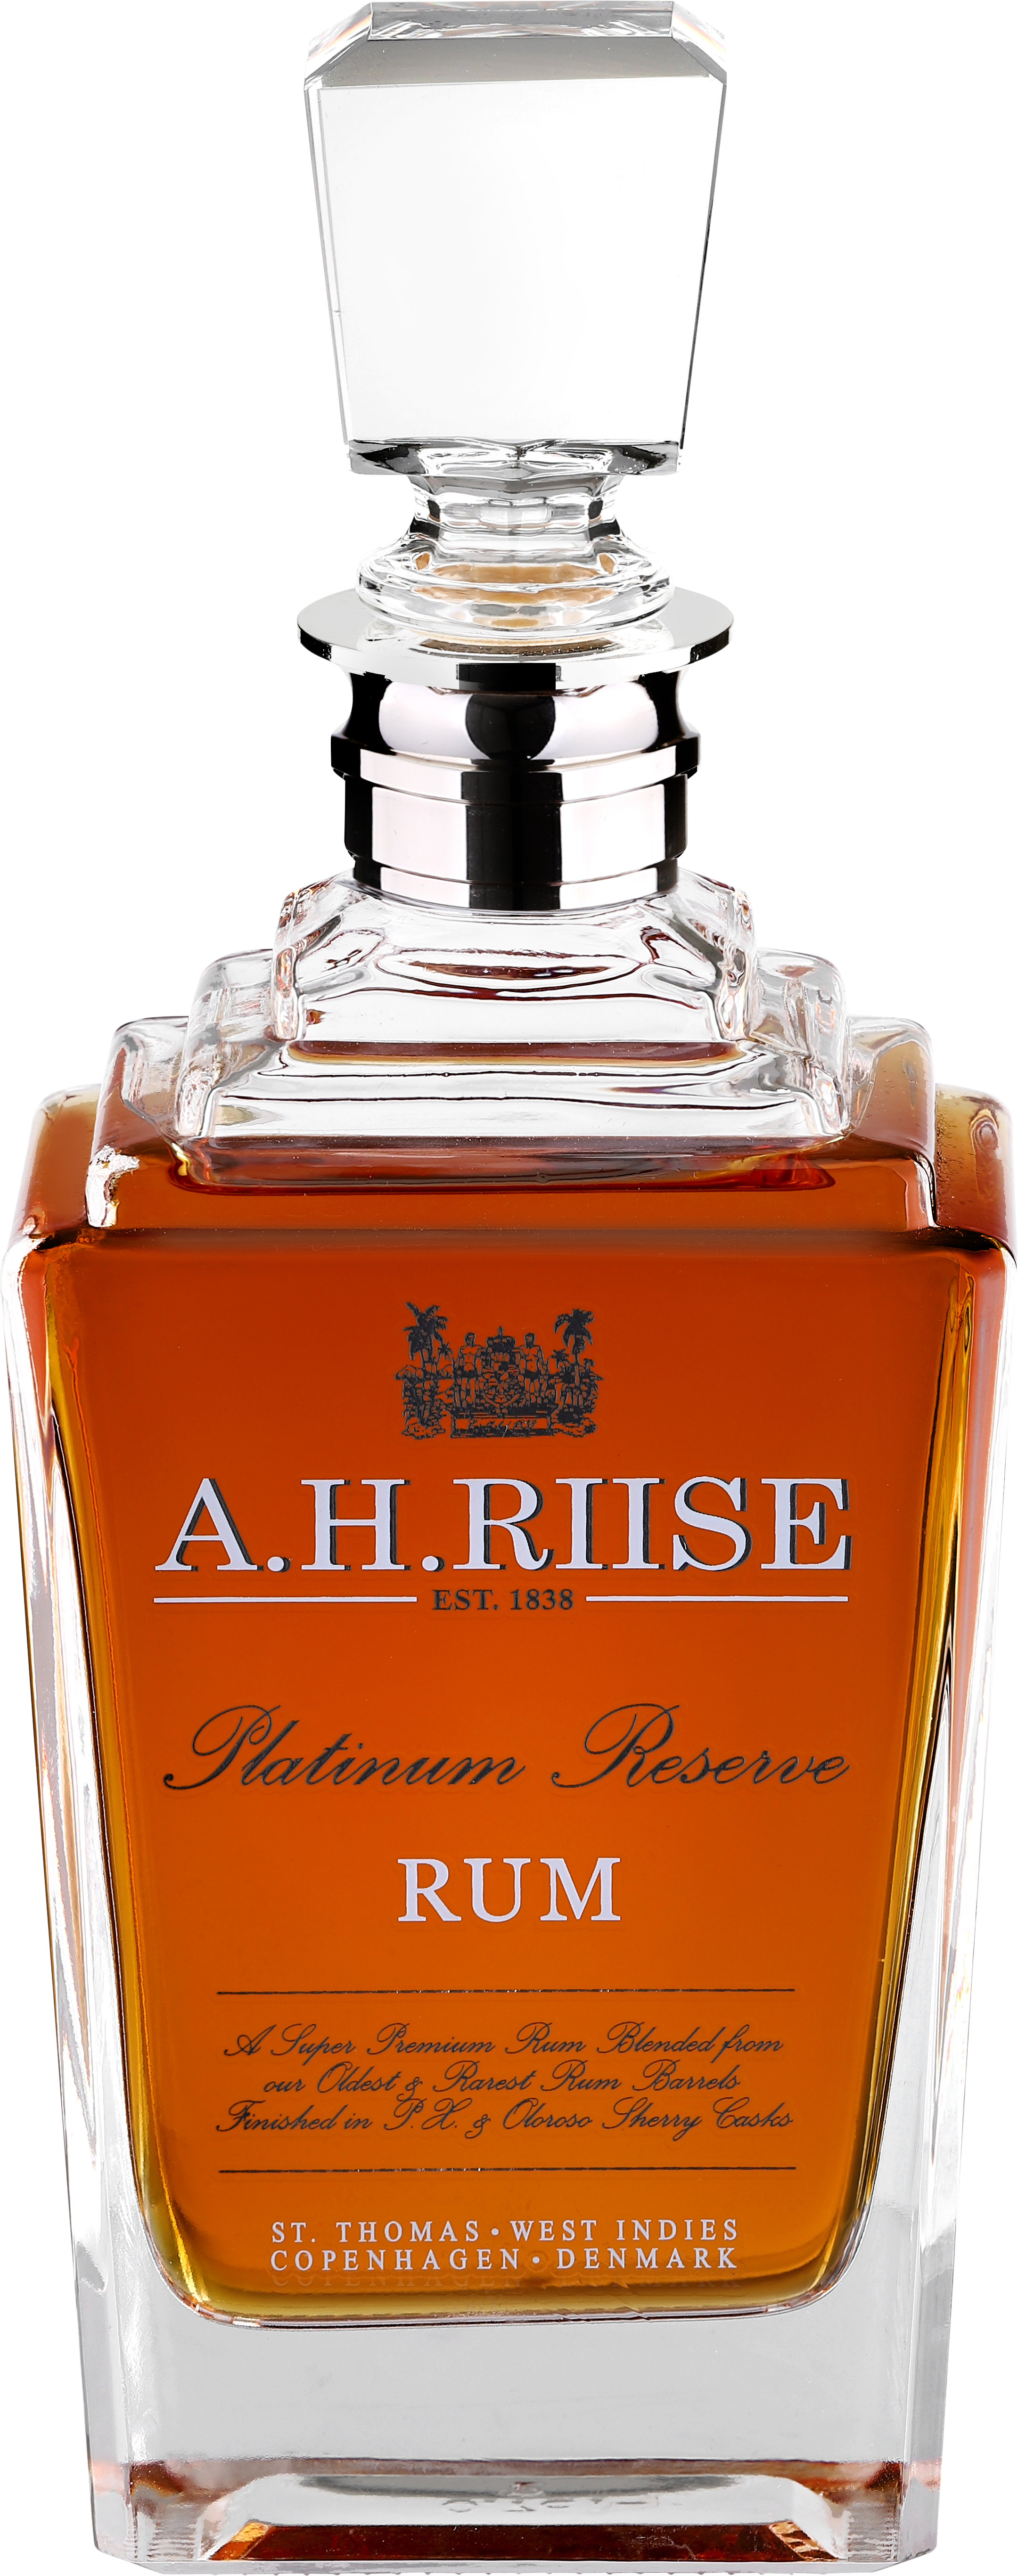 A.H. Riise Platinum Reserve Rum 42% 0,7l